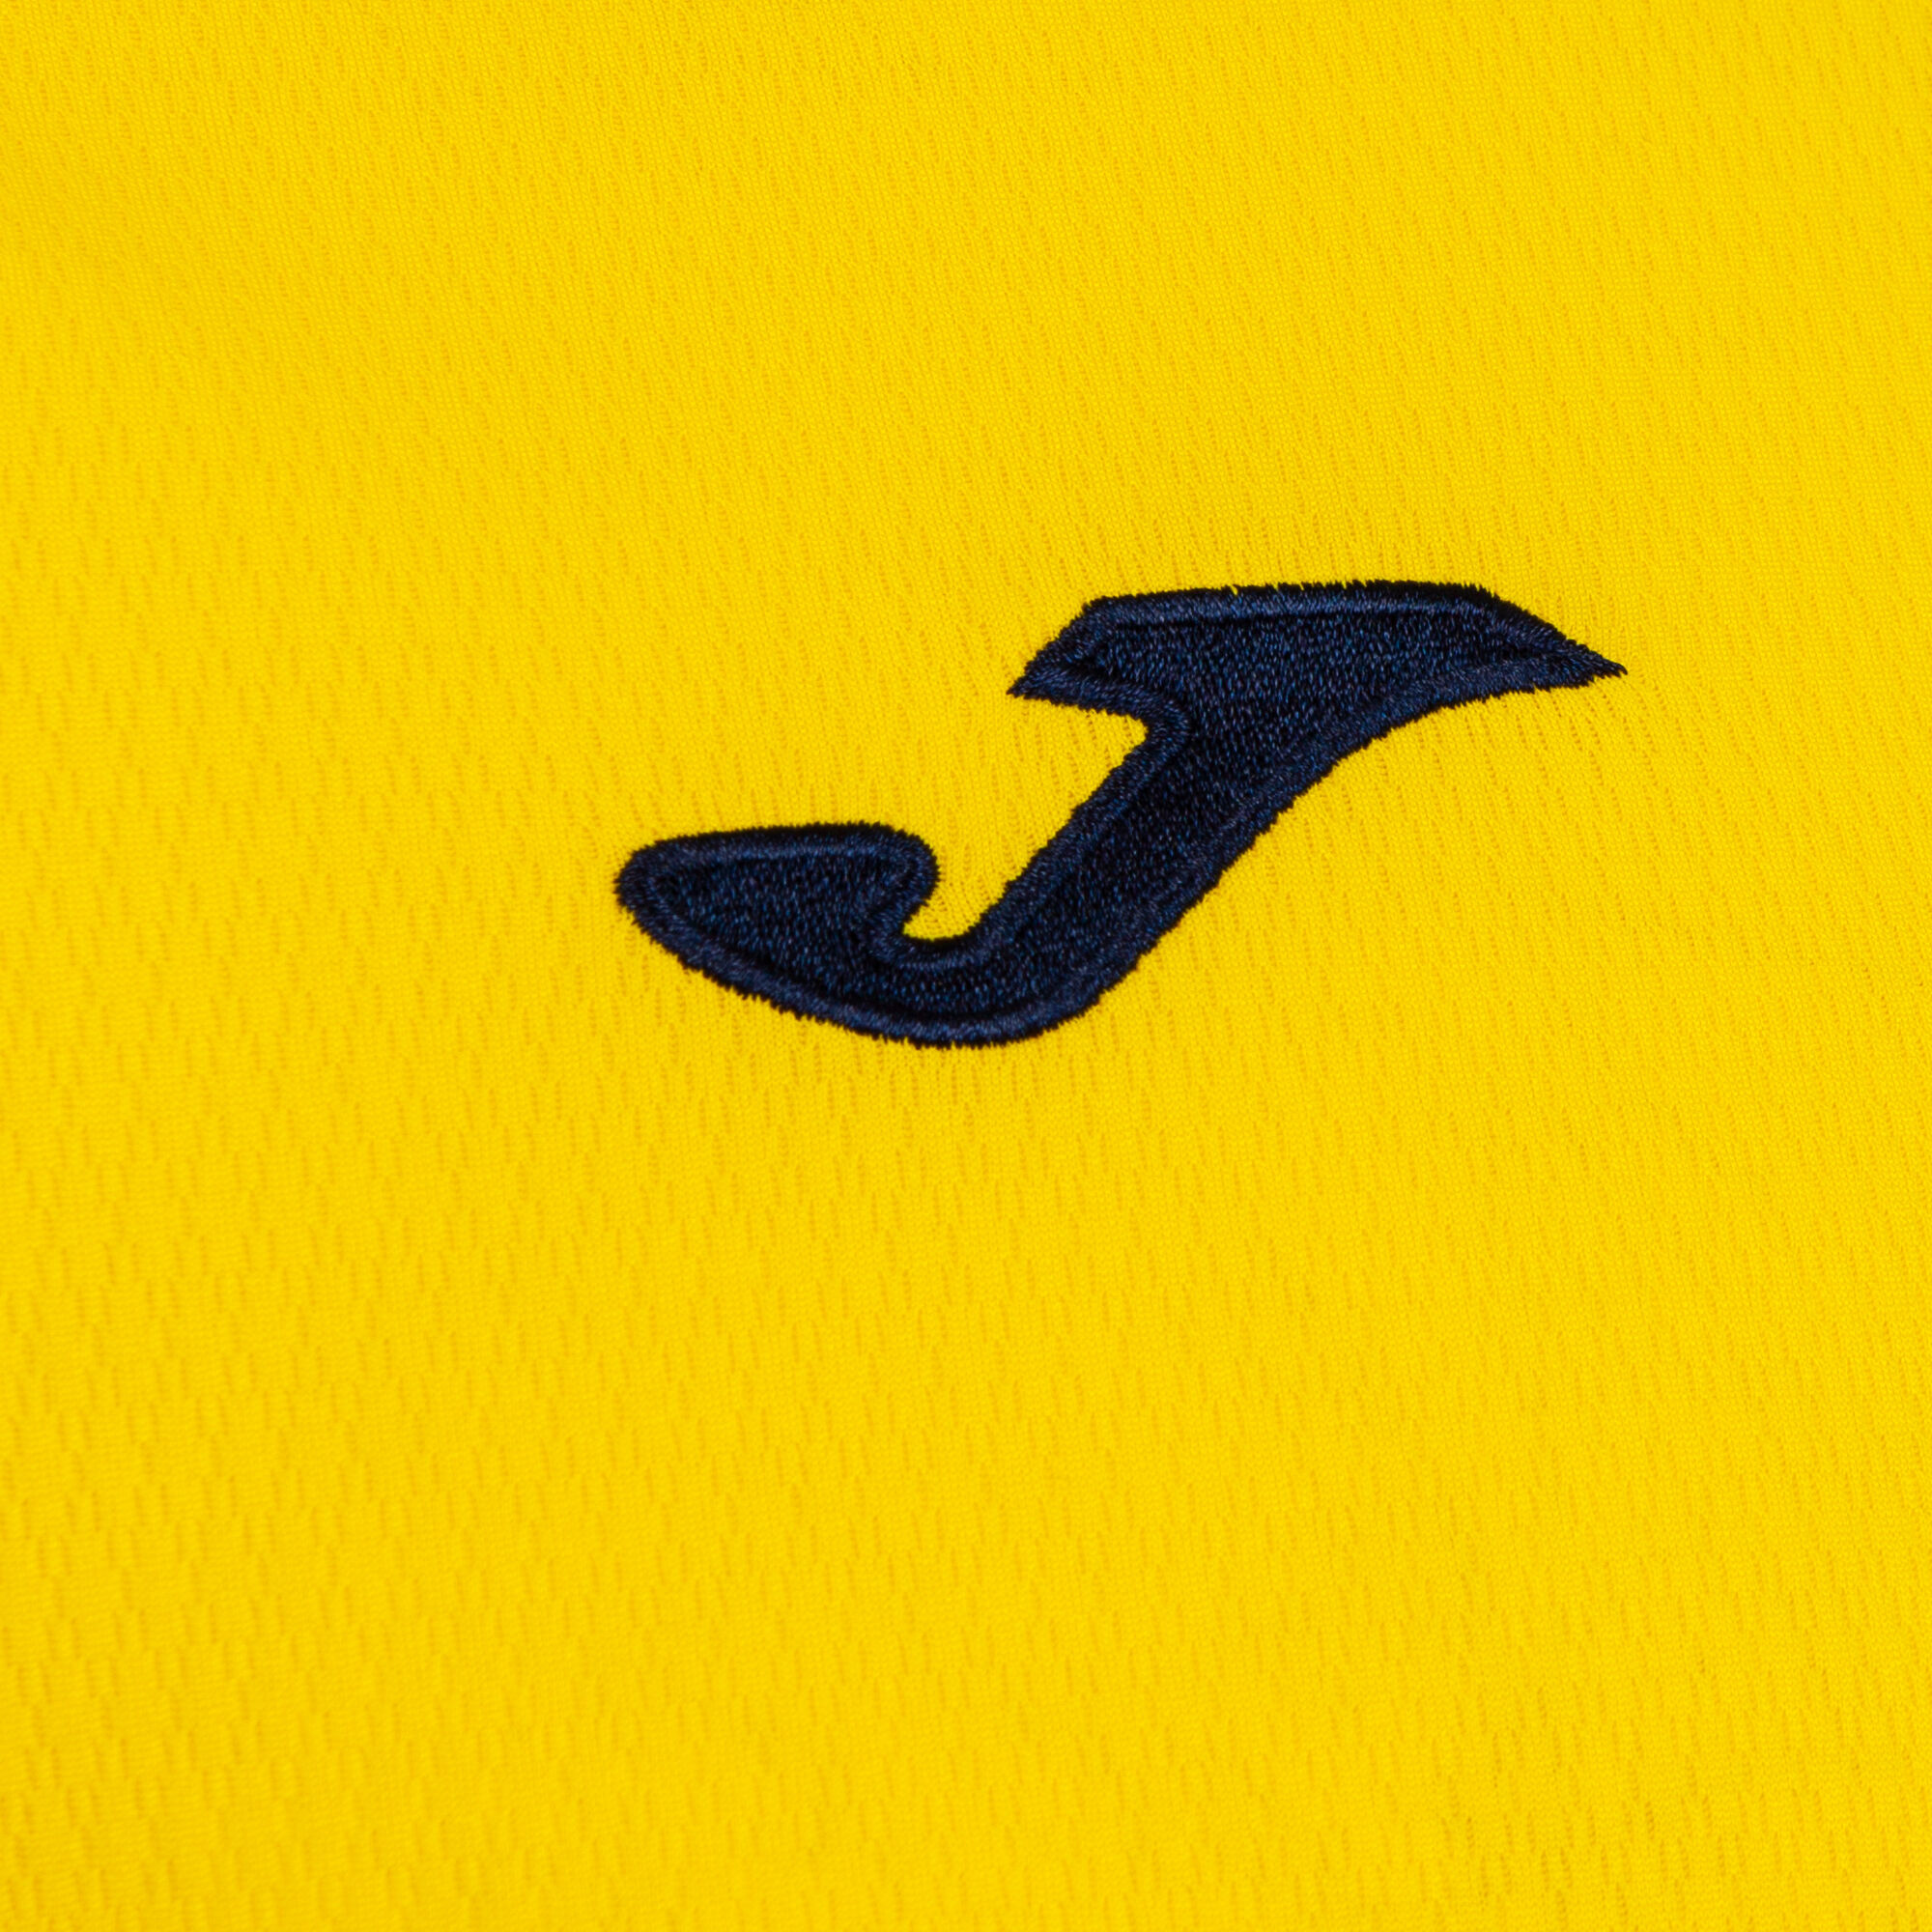 Camiseta manga corta hombre Eco Championship amarillo marino